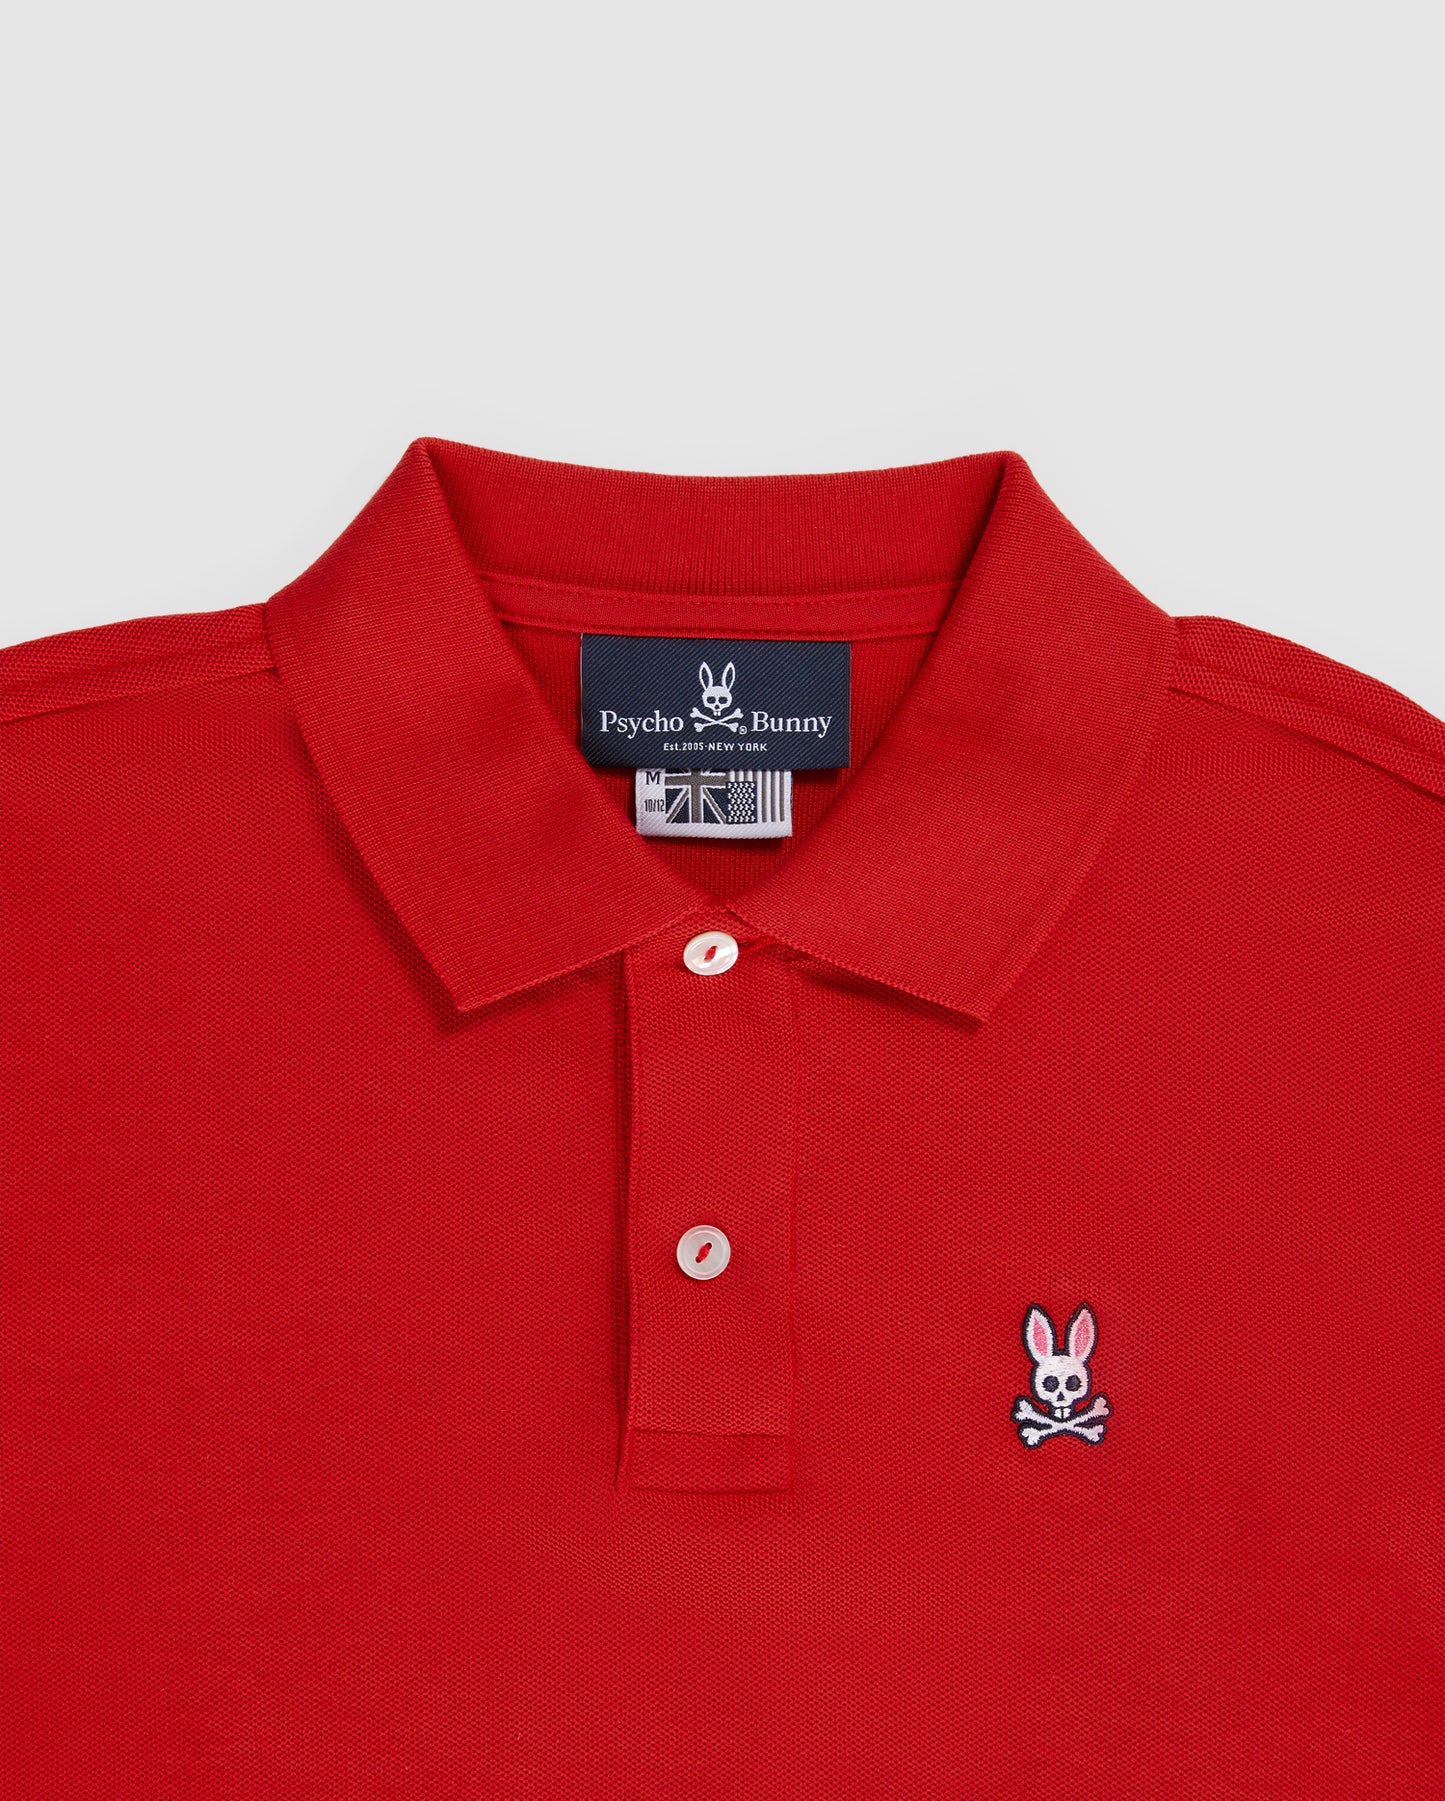 Tronixpro Unisex's Classic Fishing Polo Shirt, Red, Medium